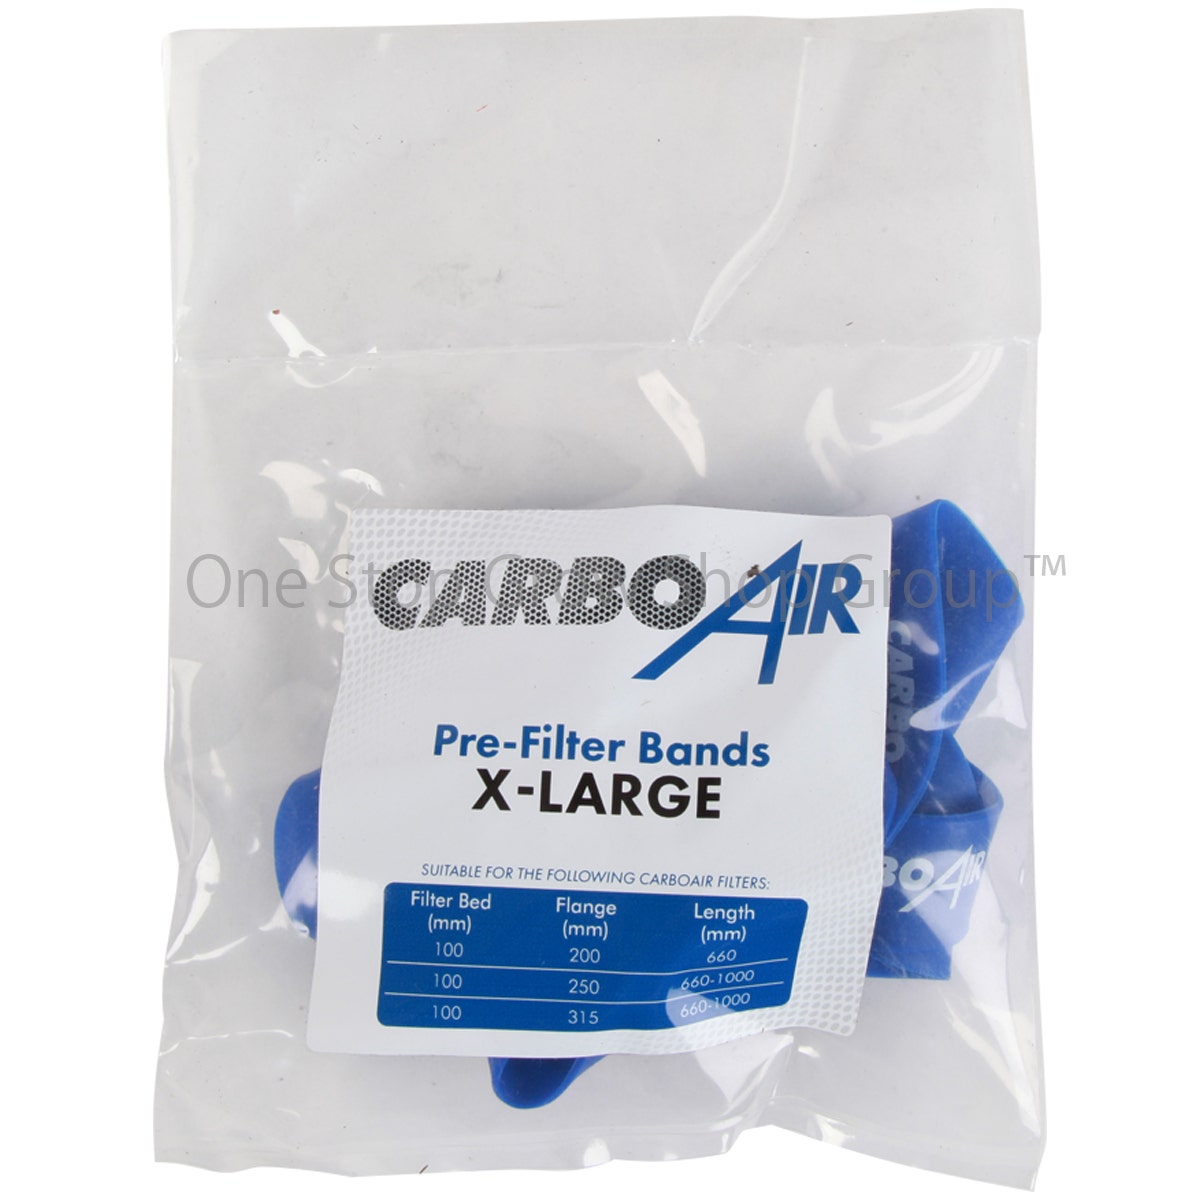 CarboAir Pre-Filter Bands